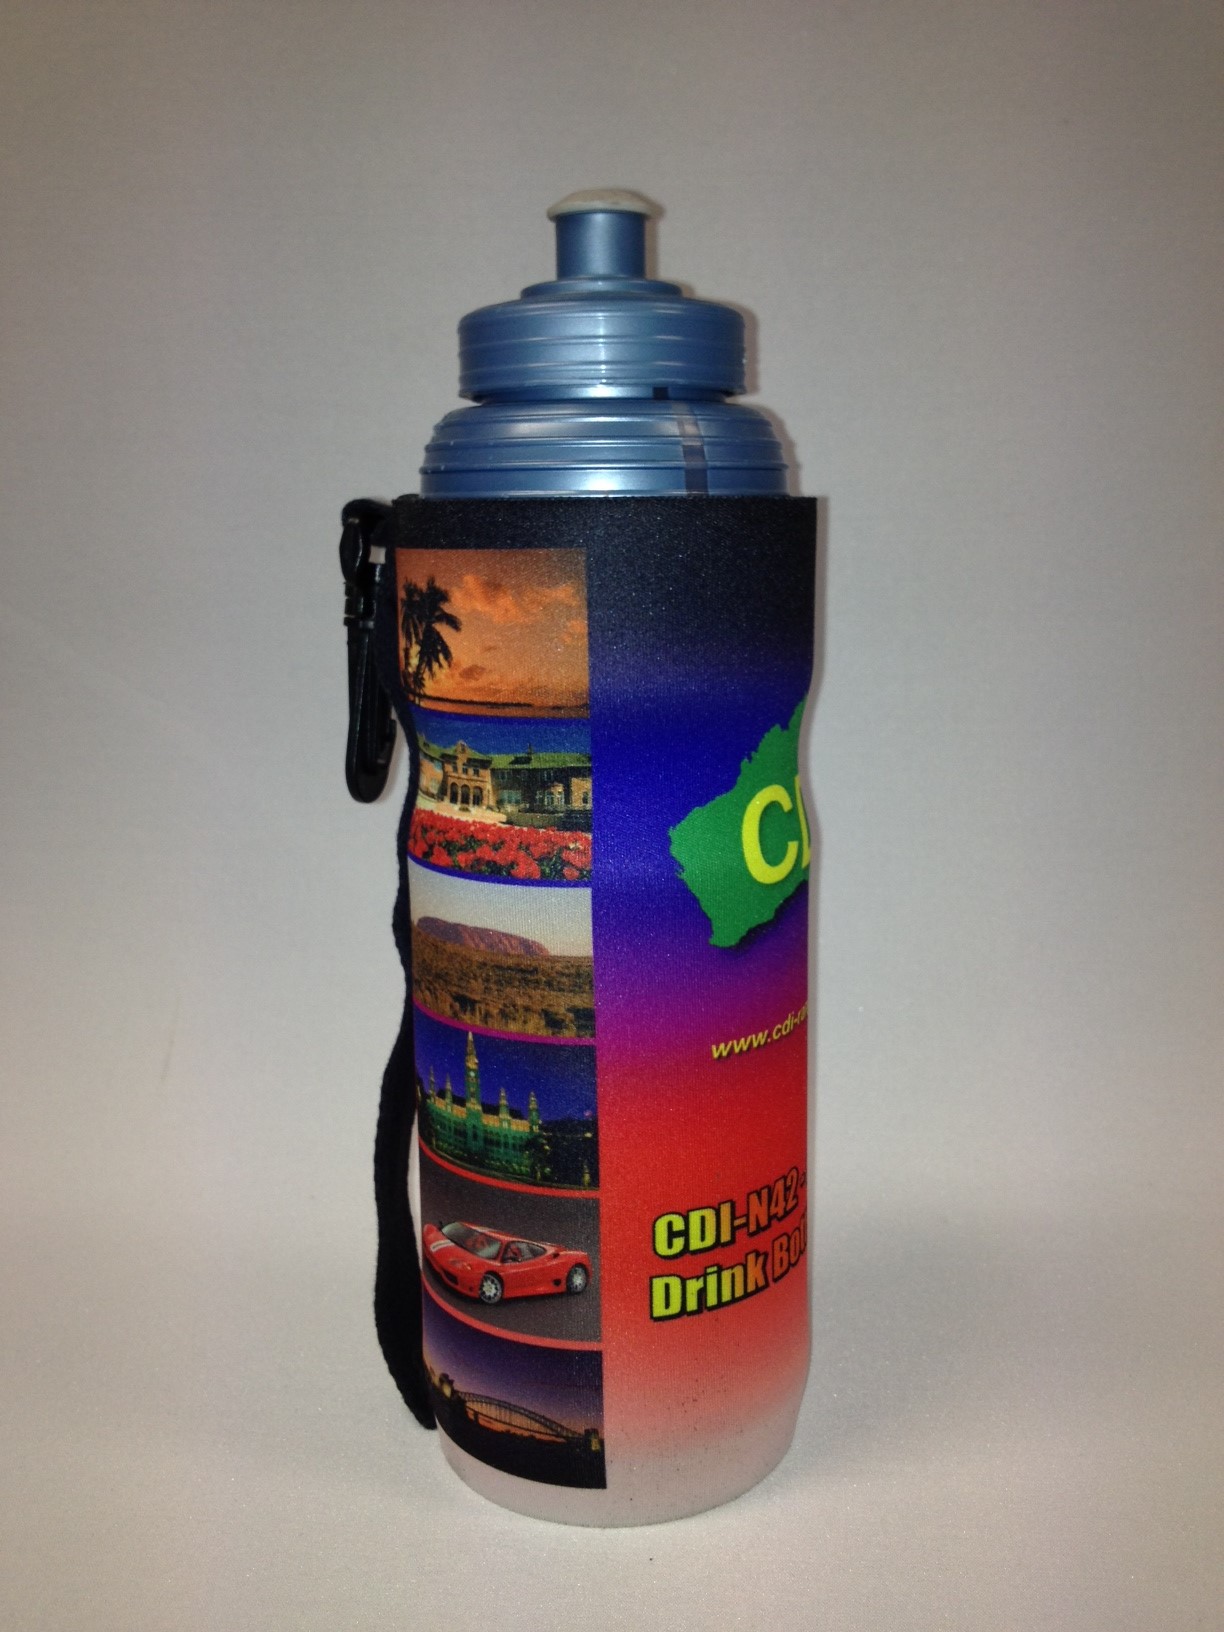 CDI water bottle holder